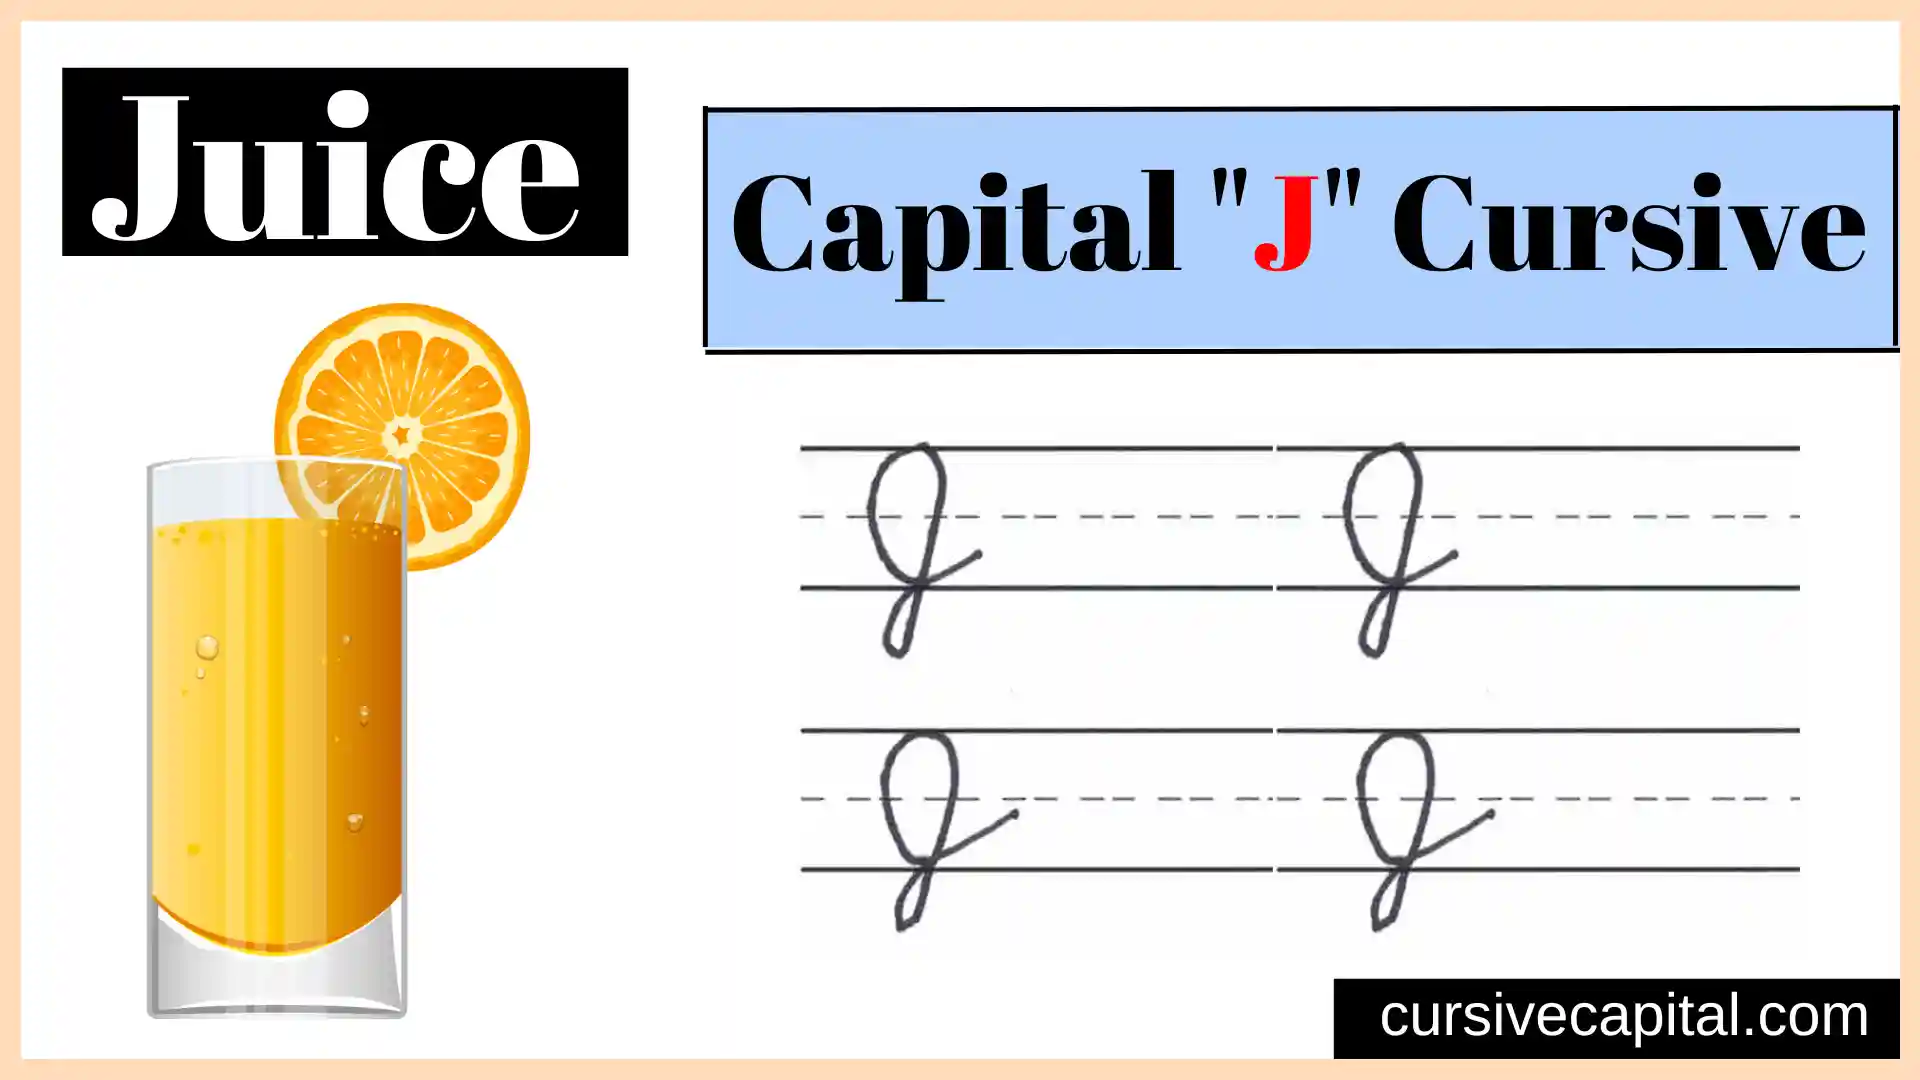 Capital J cursive